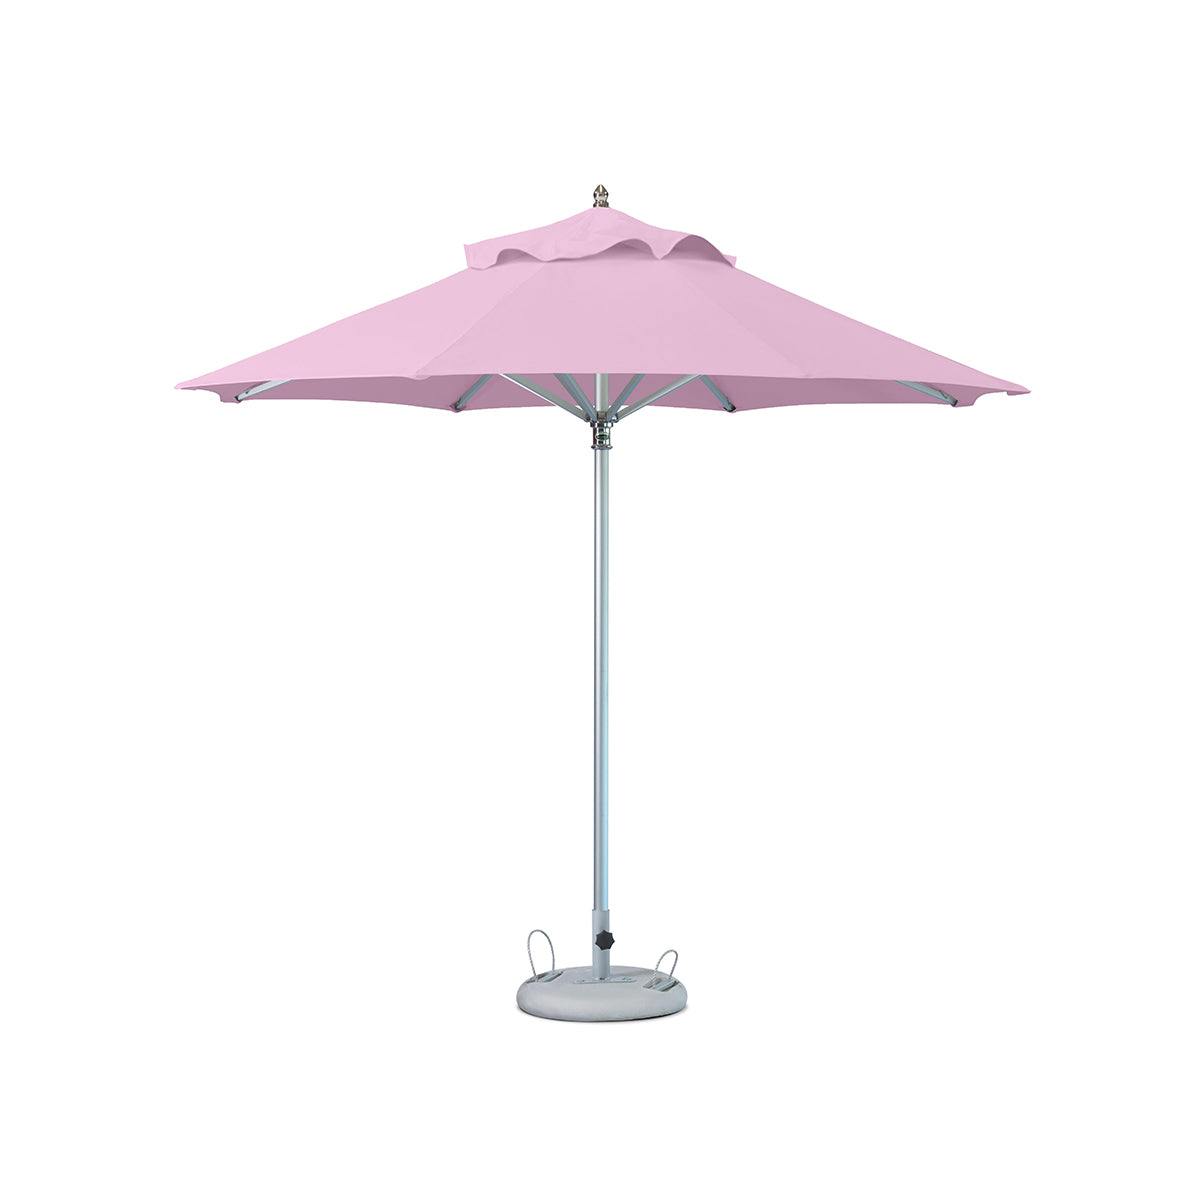 Most Beautiful Outdoor Umbrellas